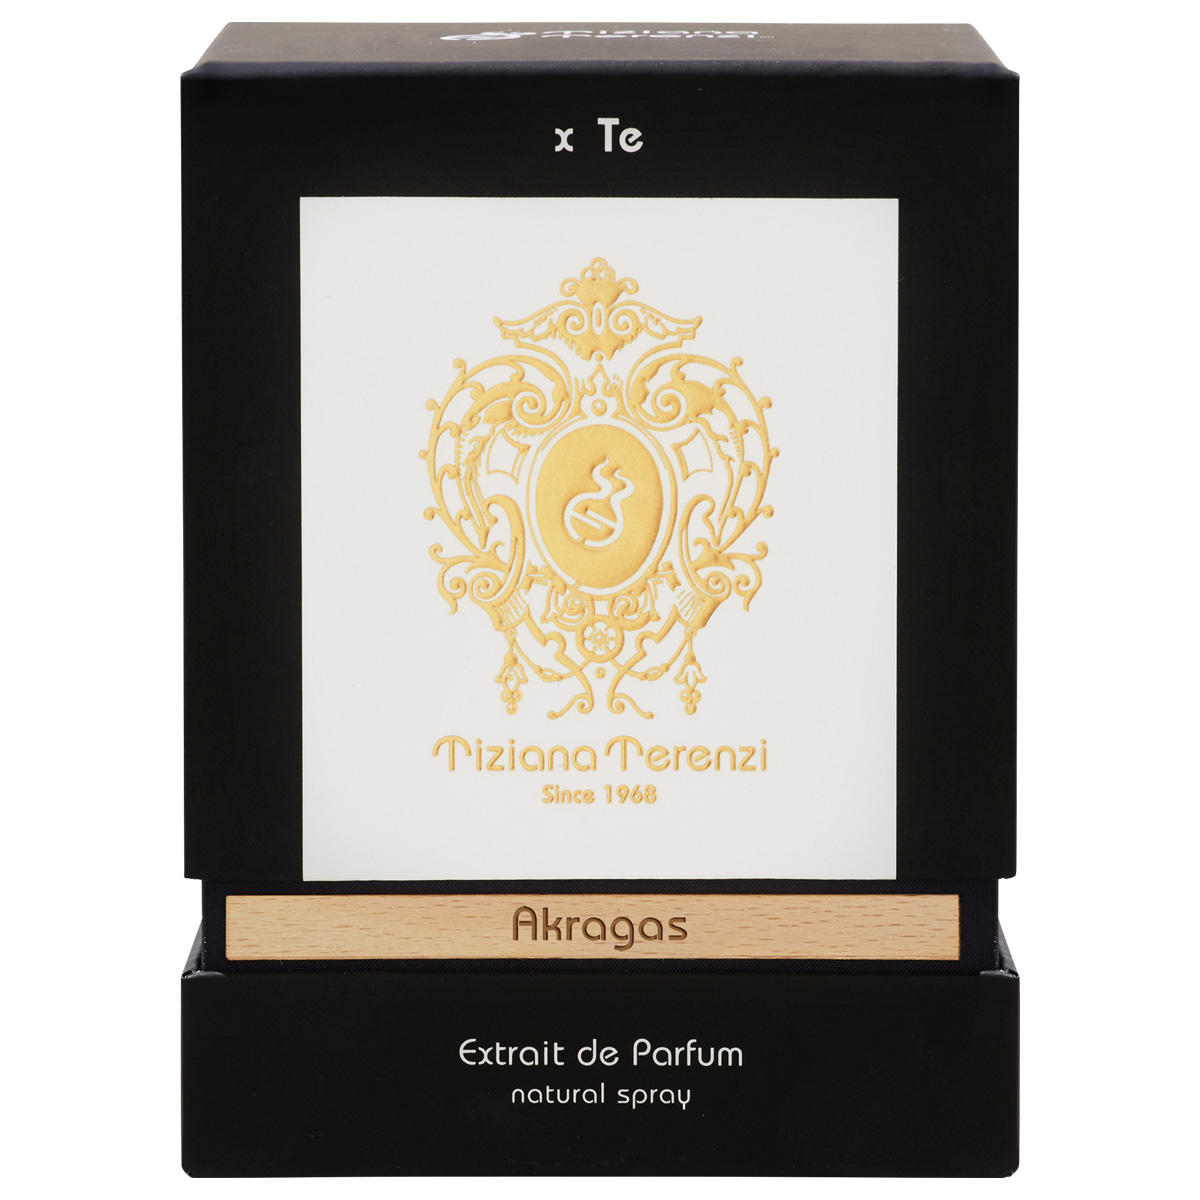 Tiziana Terenzi Akragas Extrait de Parfum 100 ml - 3